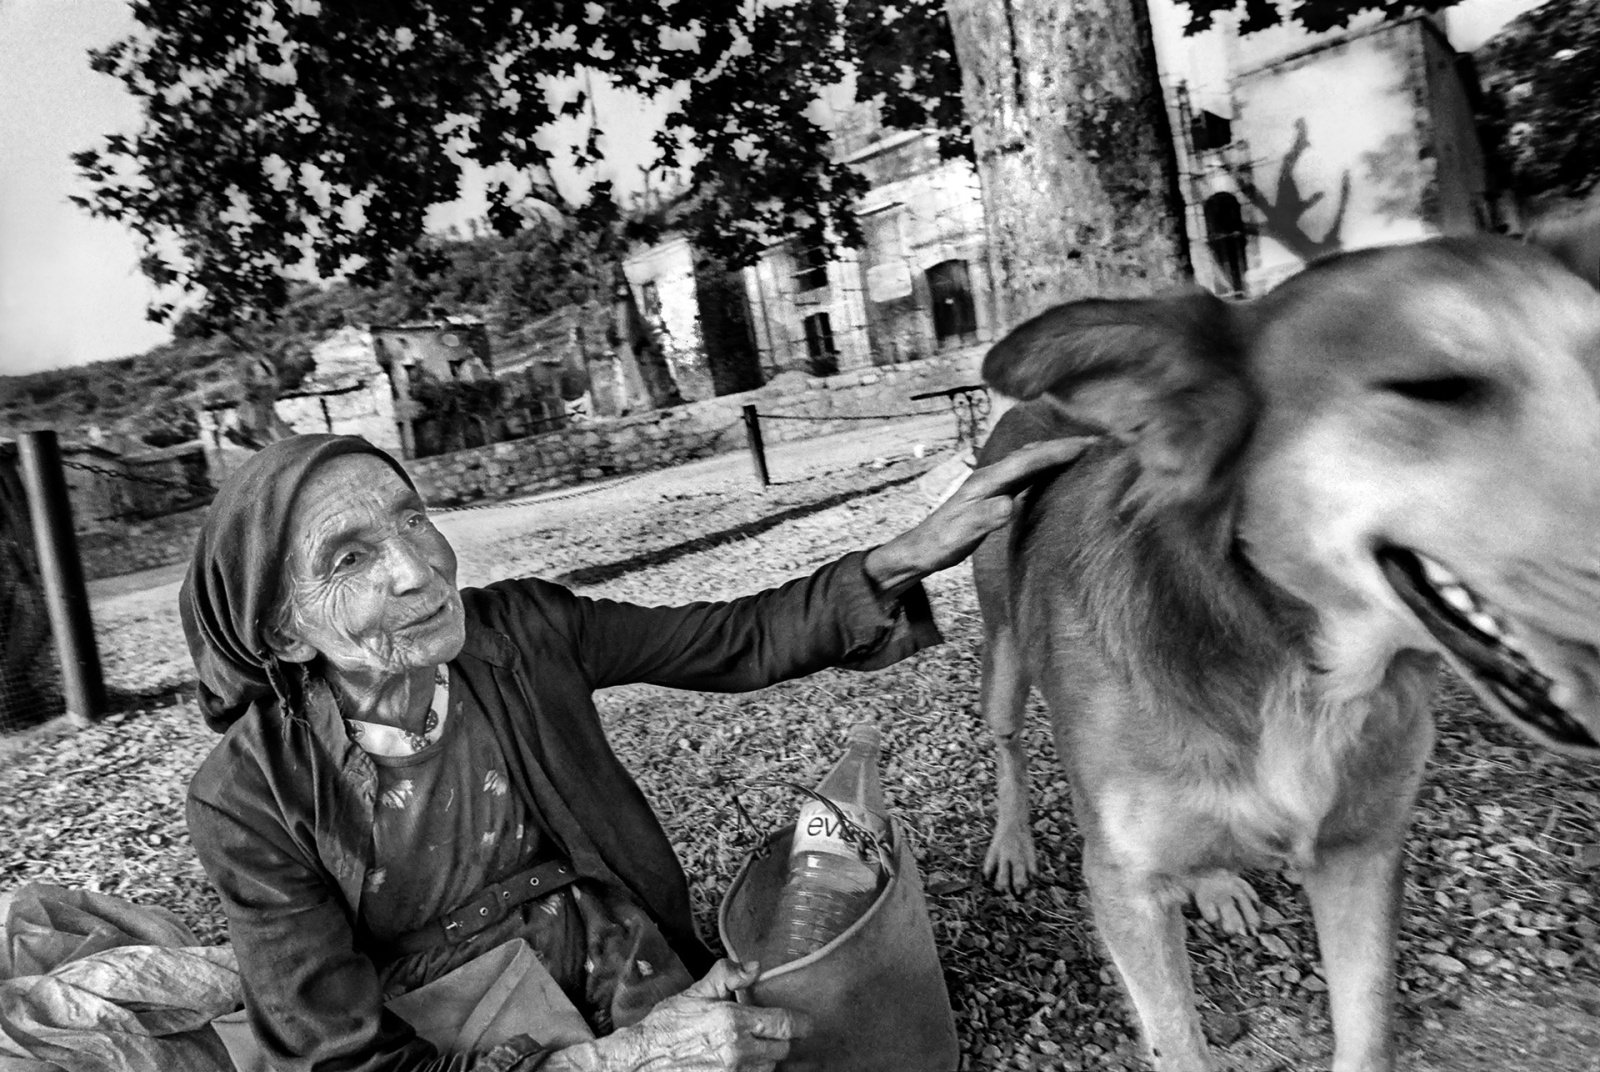 Dorina and the dog in the abandoned village, Roscigno - Italy 1992 - analogic photo